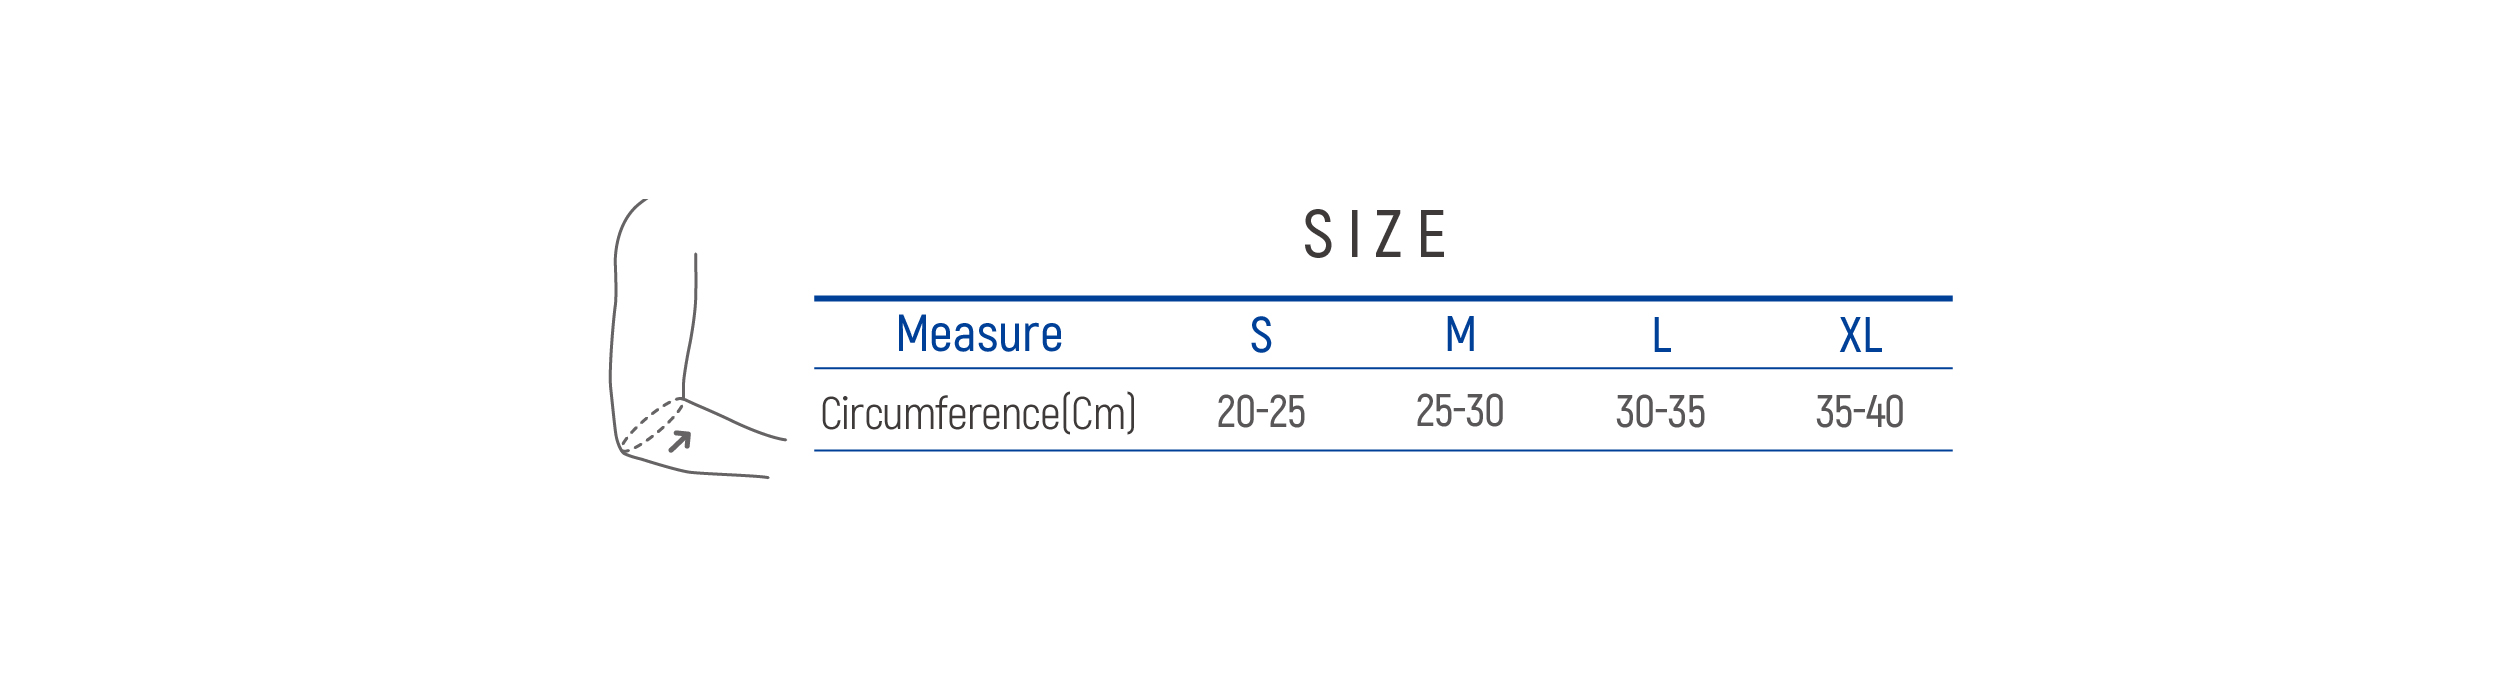 DR-E112 Size table image